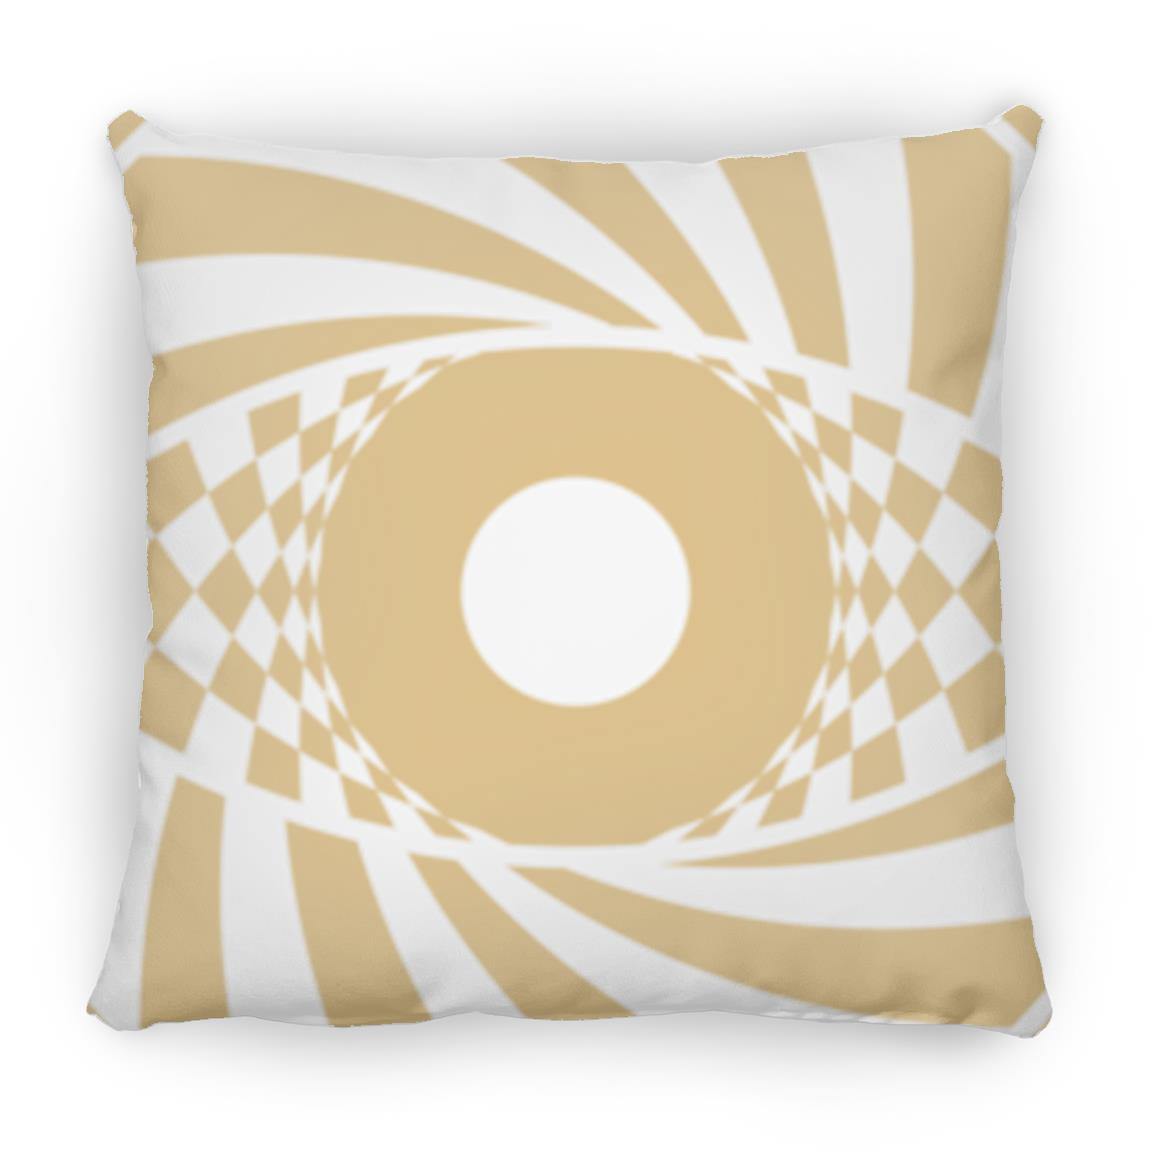 Crop Circle Pillow - Ufton - Shapes of Wisdom